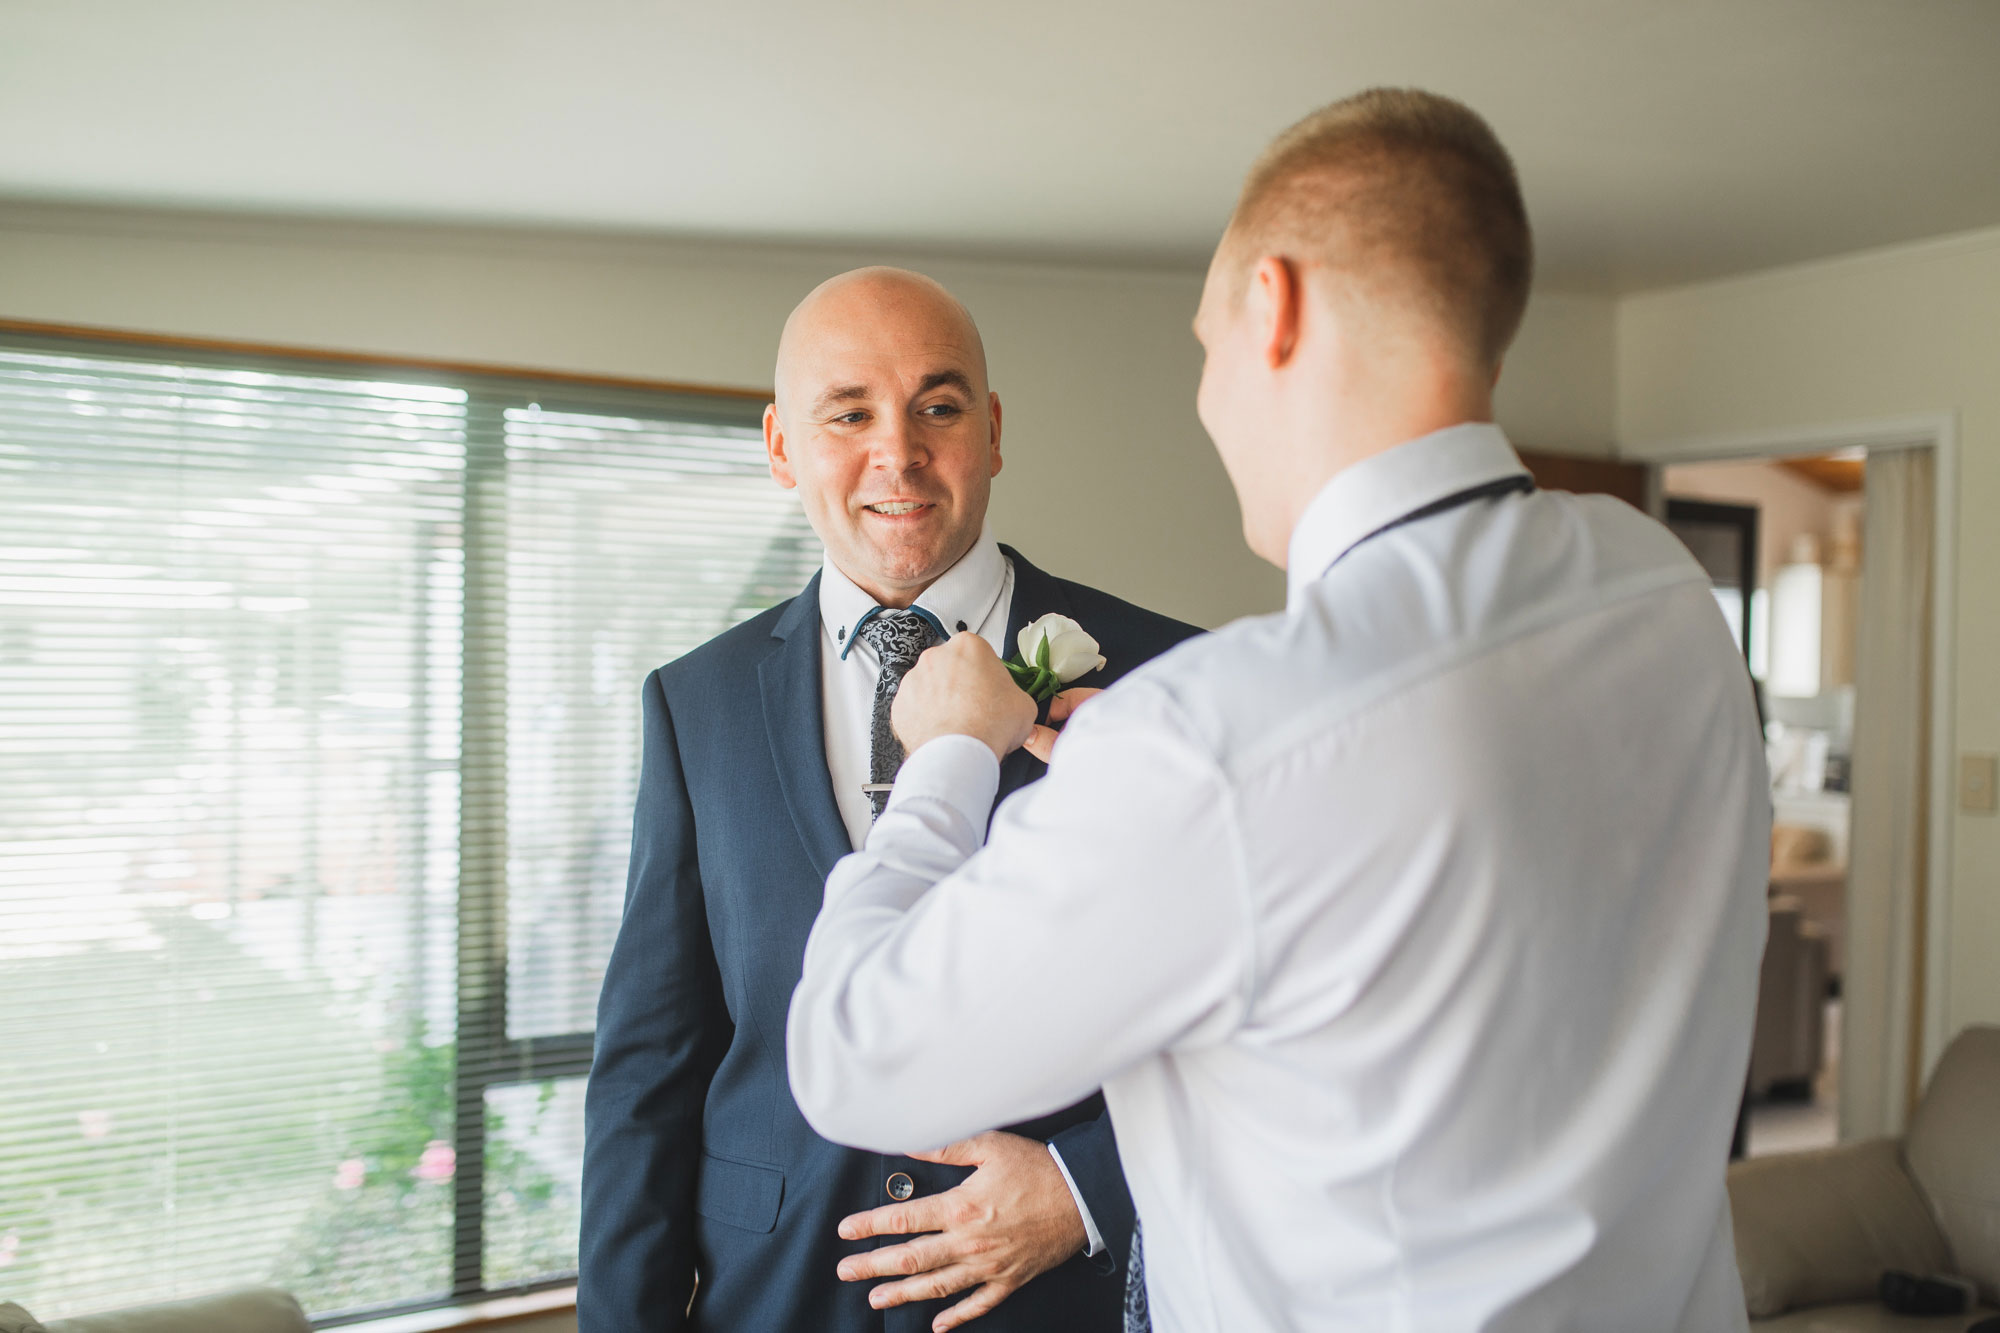 auckland wedding groom and groomsman